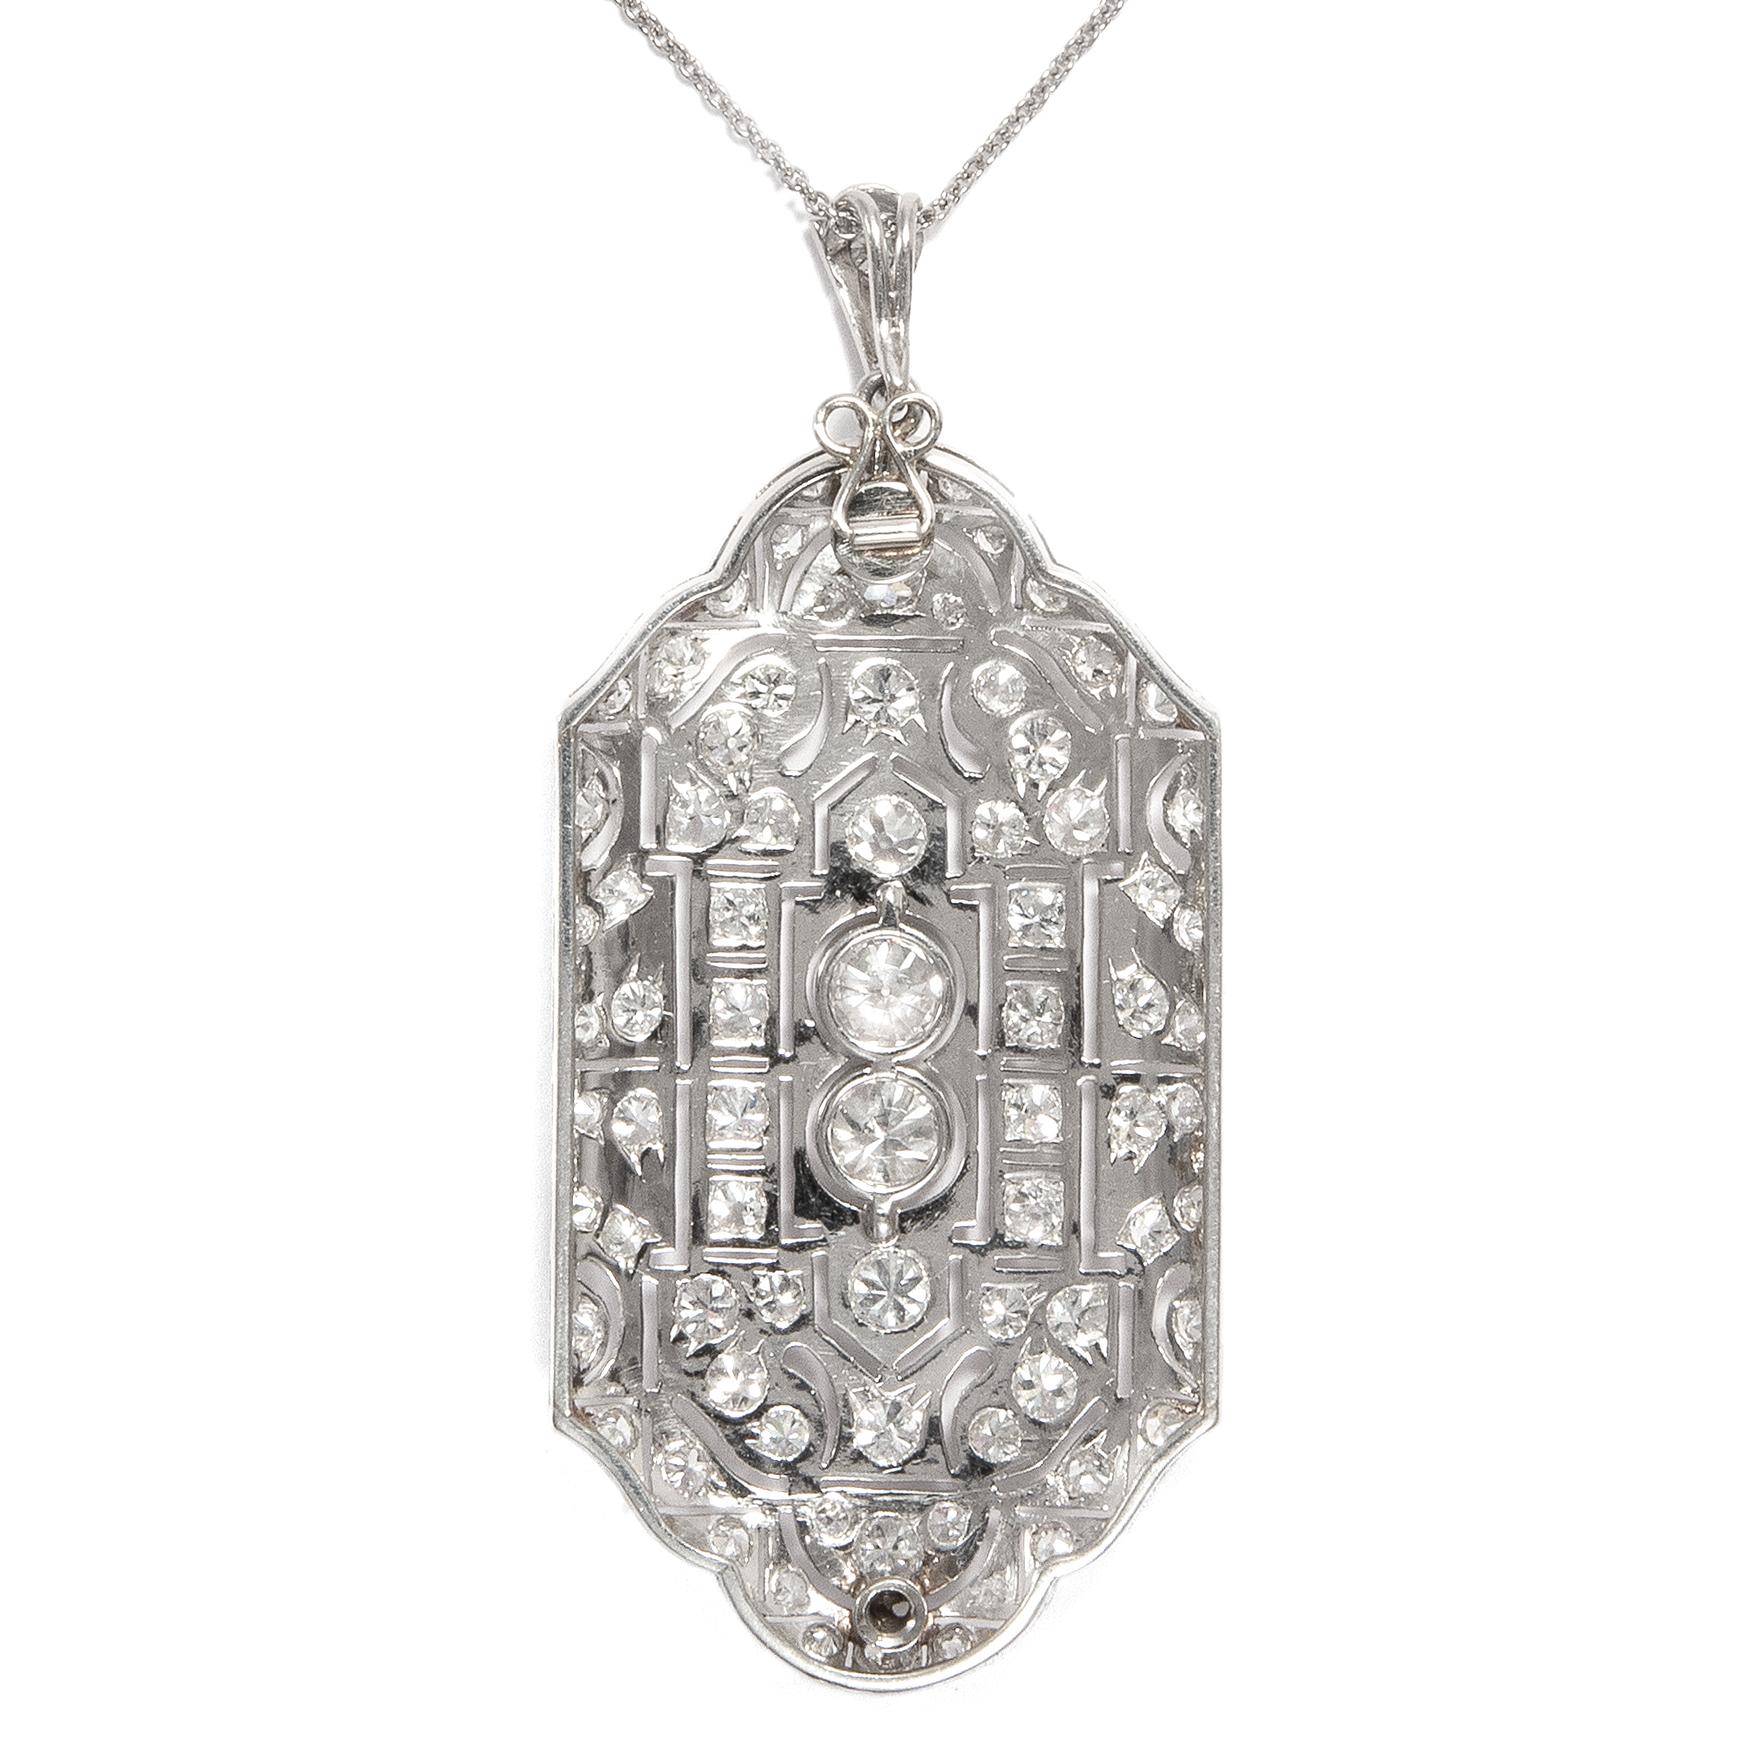 Antique Art Deco 1920s Certified 5.17 Carat Diamond Platinum Pendant Necklace In Excellent Condition For Sale In Berlin, Berlin